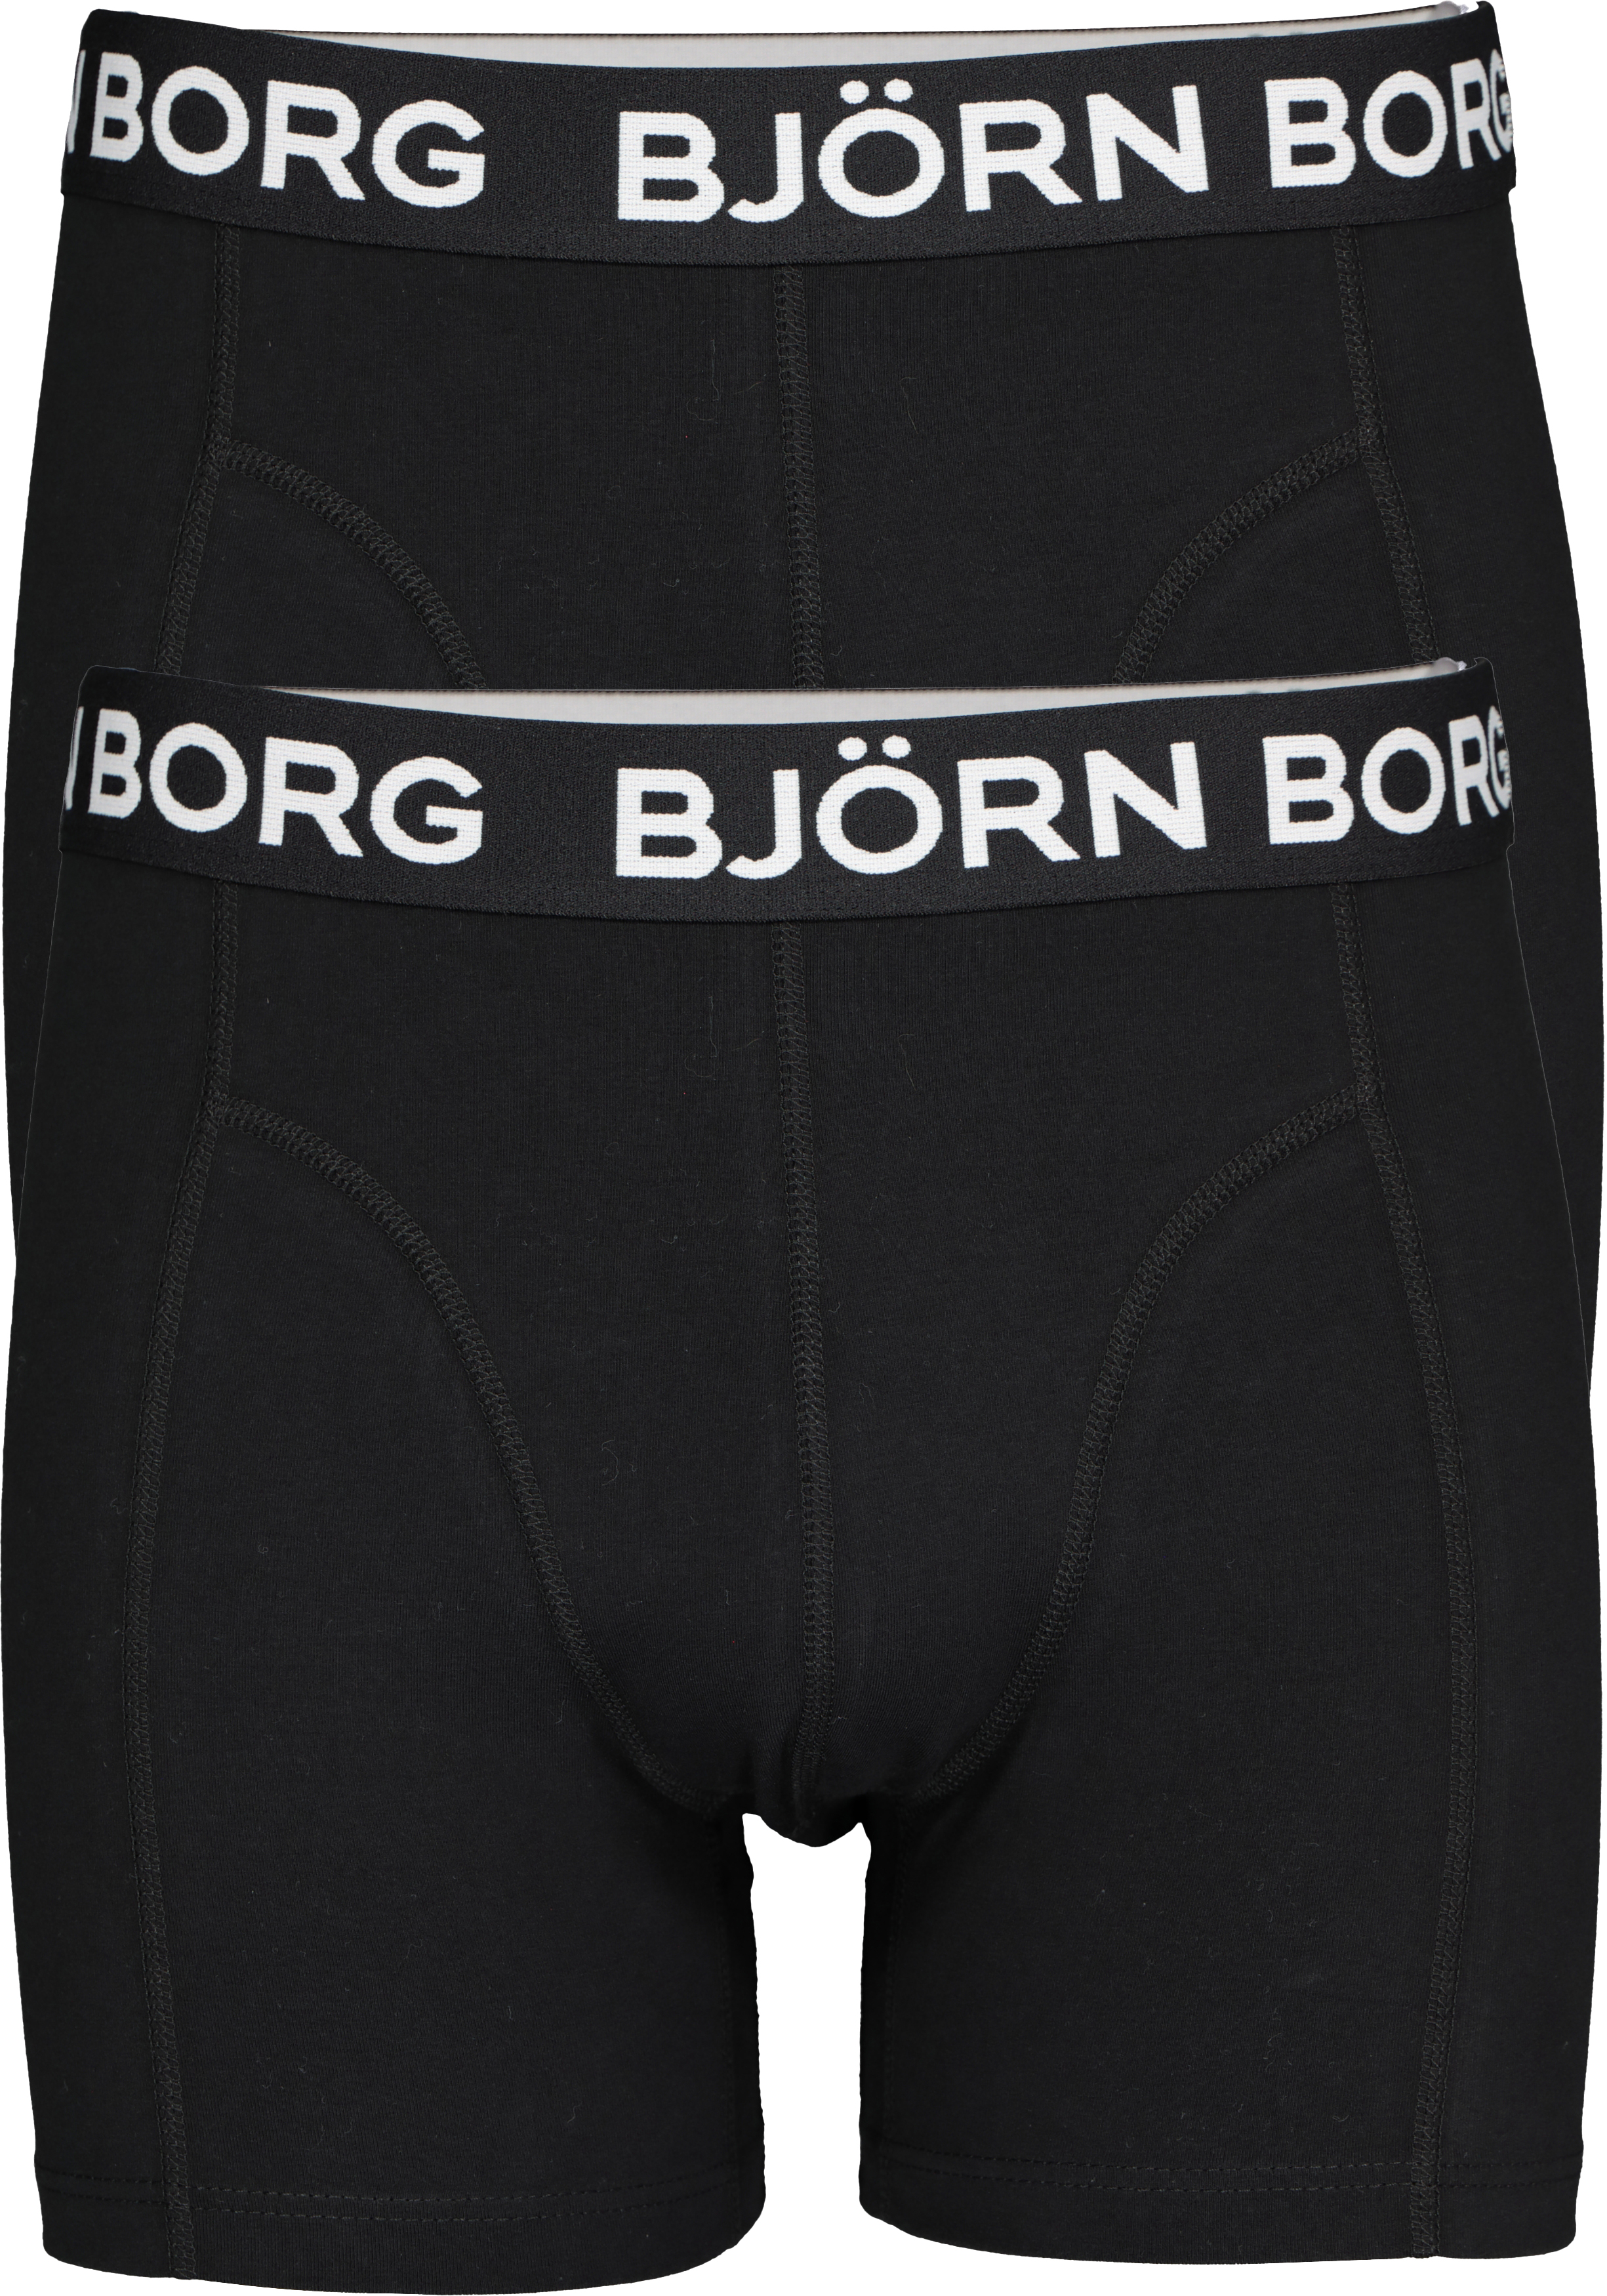 Bjorn Borg boxershorts Core (2-pack), heren boxers normale lengte, zwart